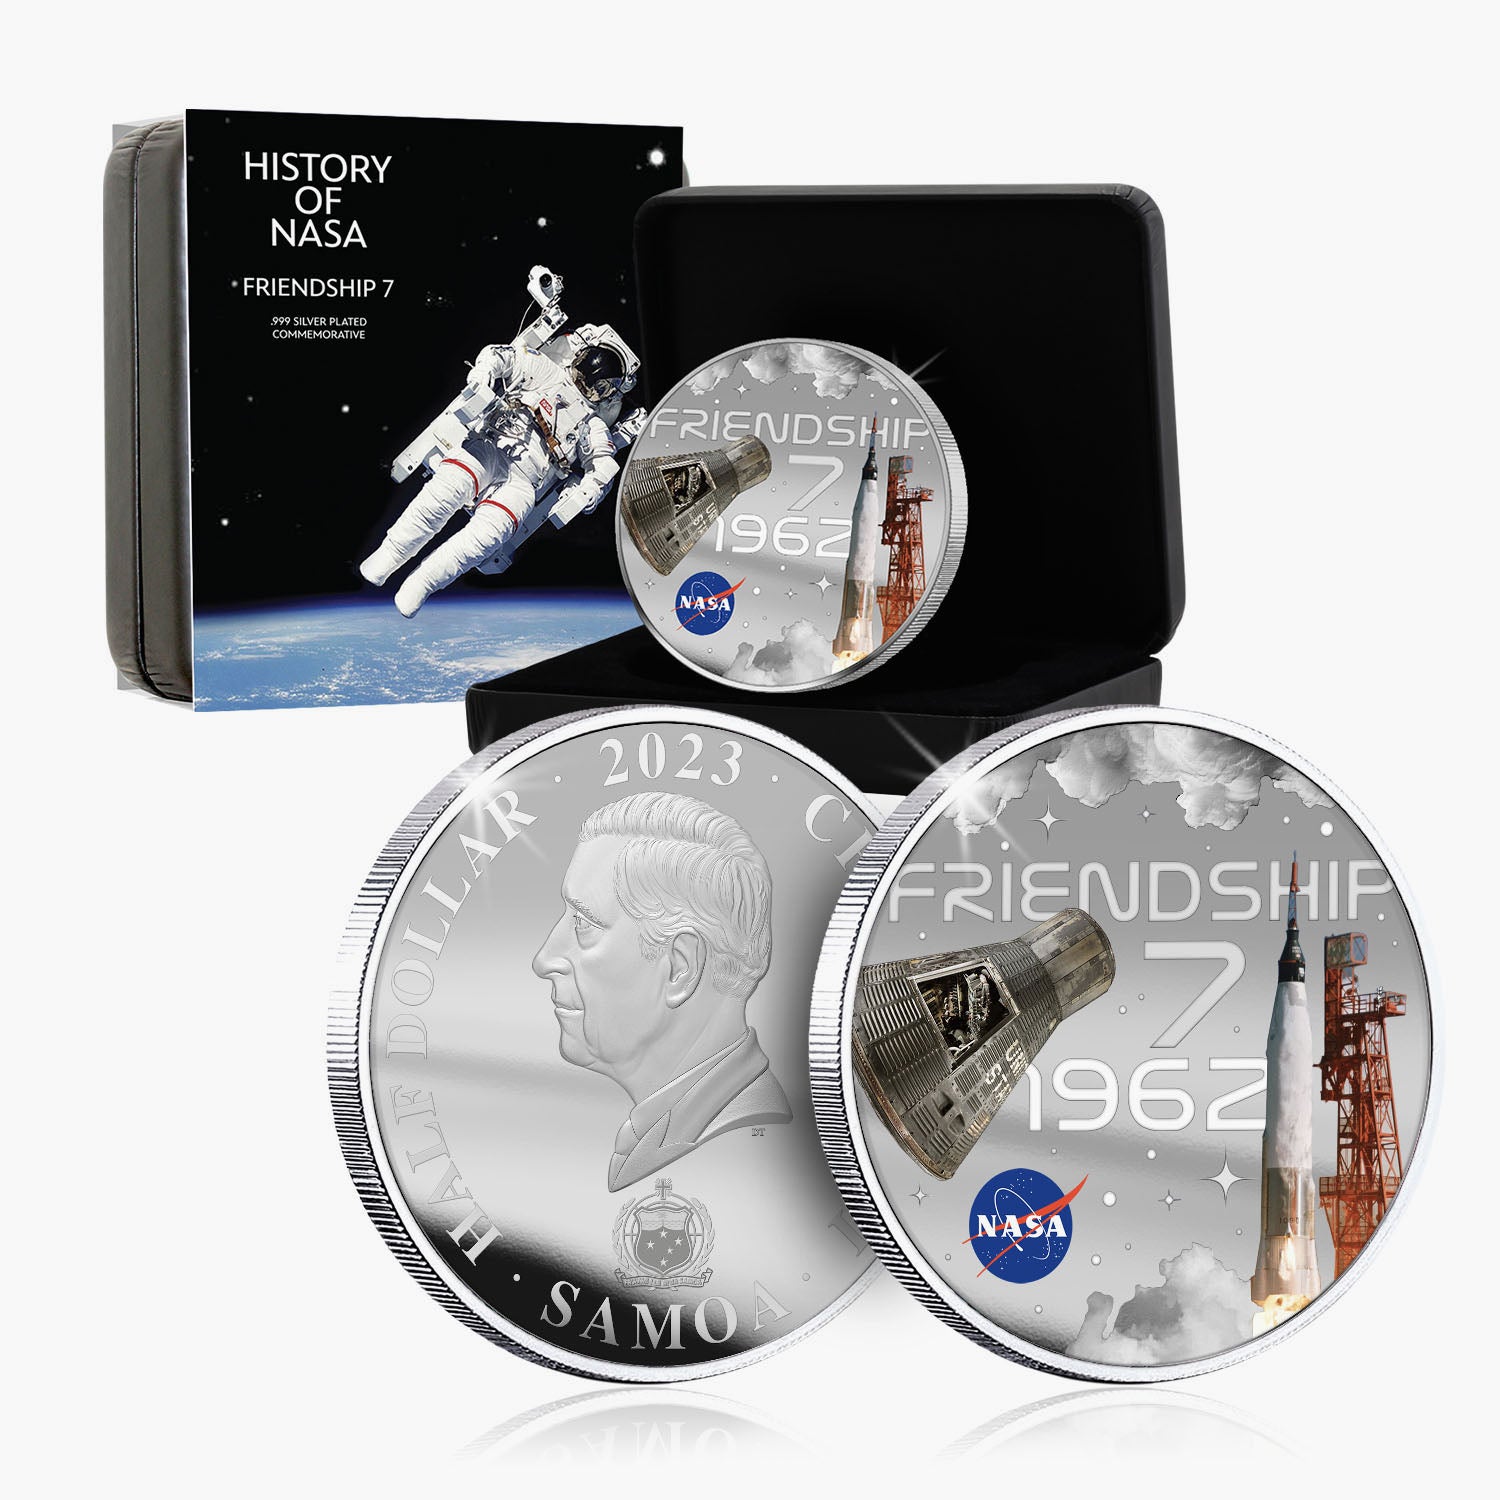 NASA 2023 Friendship 50mm Silver-plated Coin